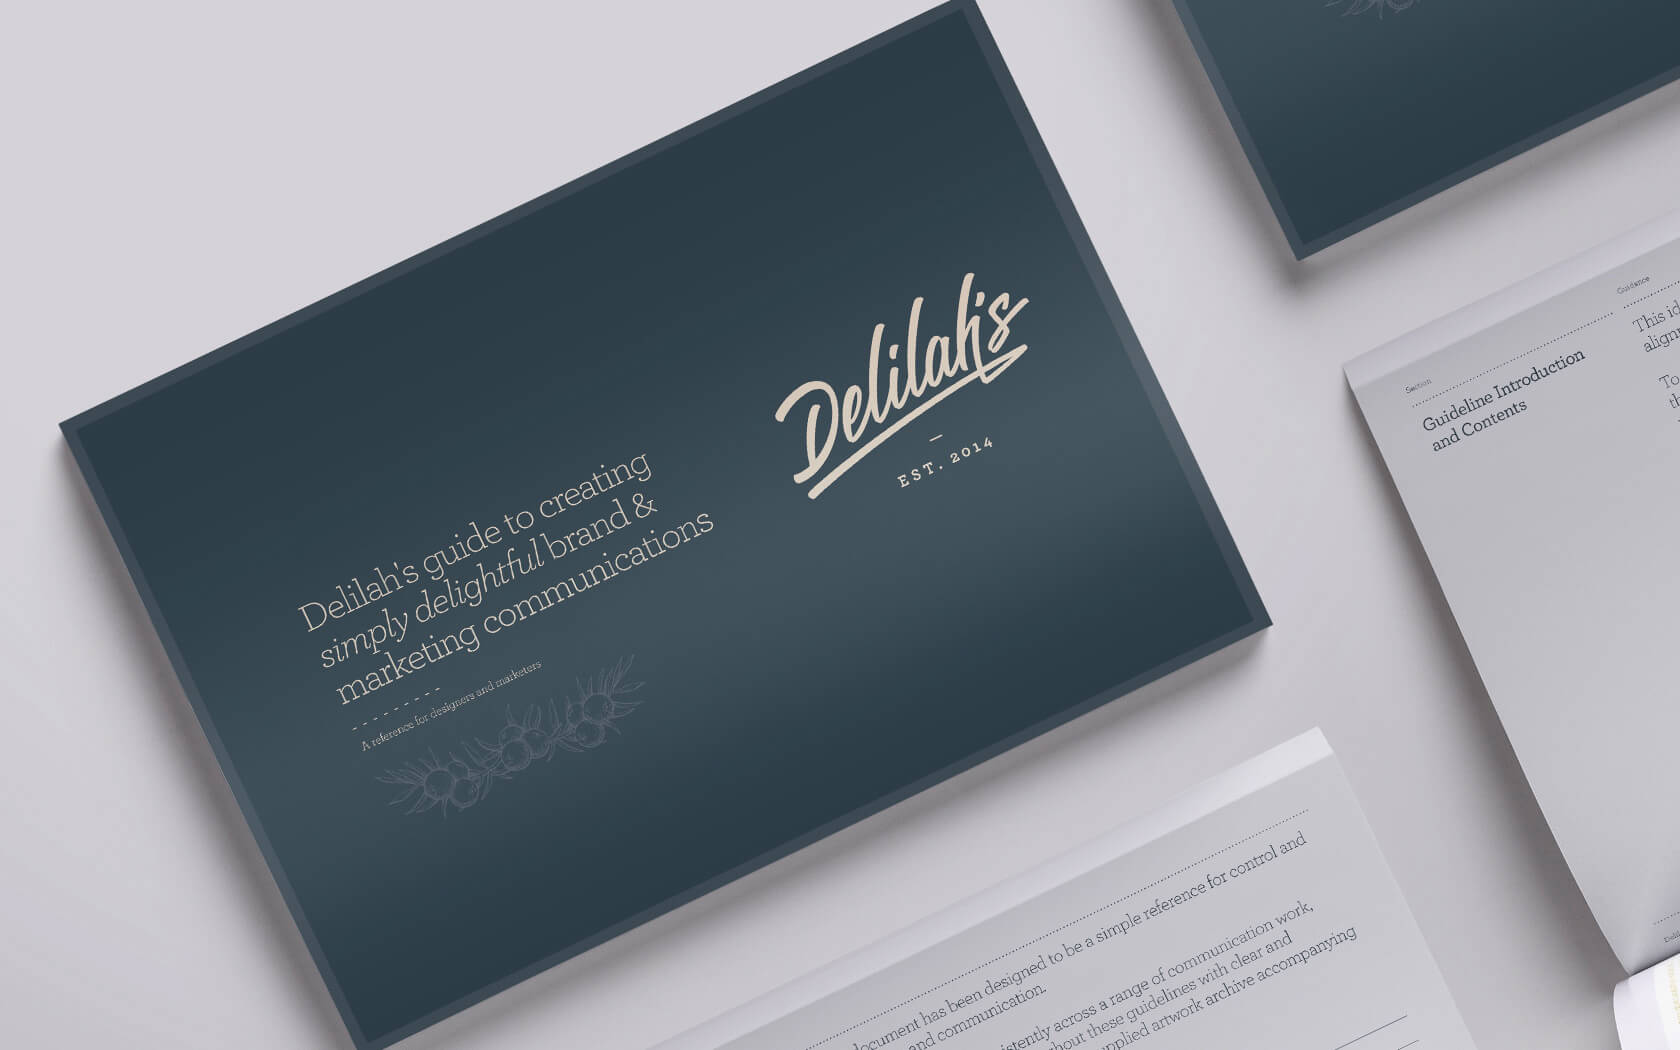 Delilah’s. Brand guidelines cover